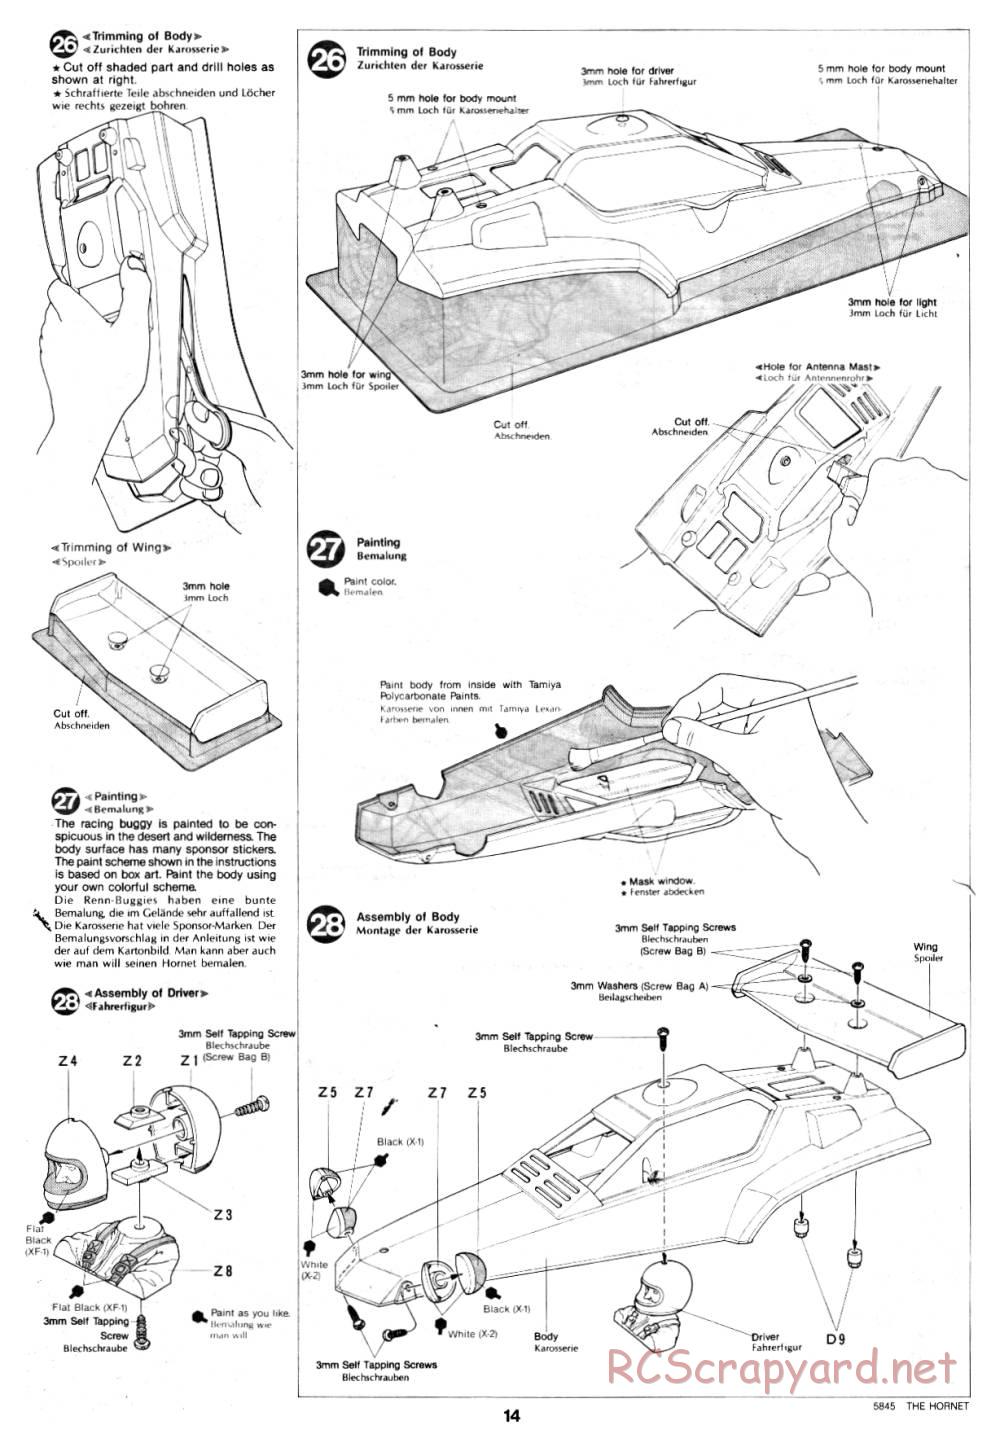 Tamiya - The Hornet - 58045 - Manual - Page 14